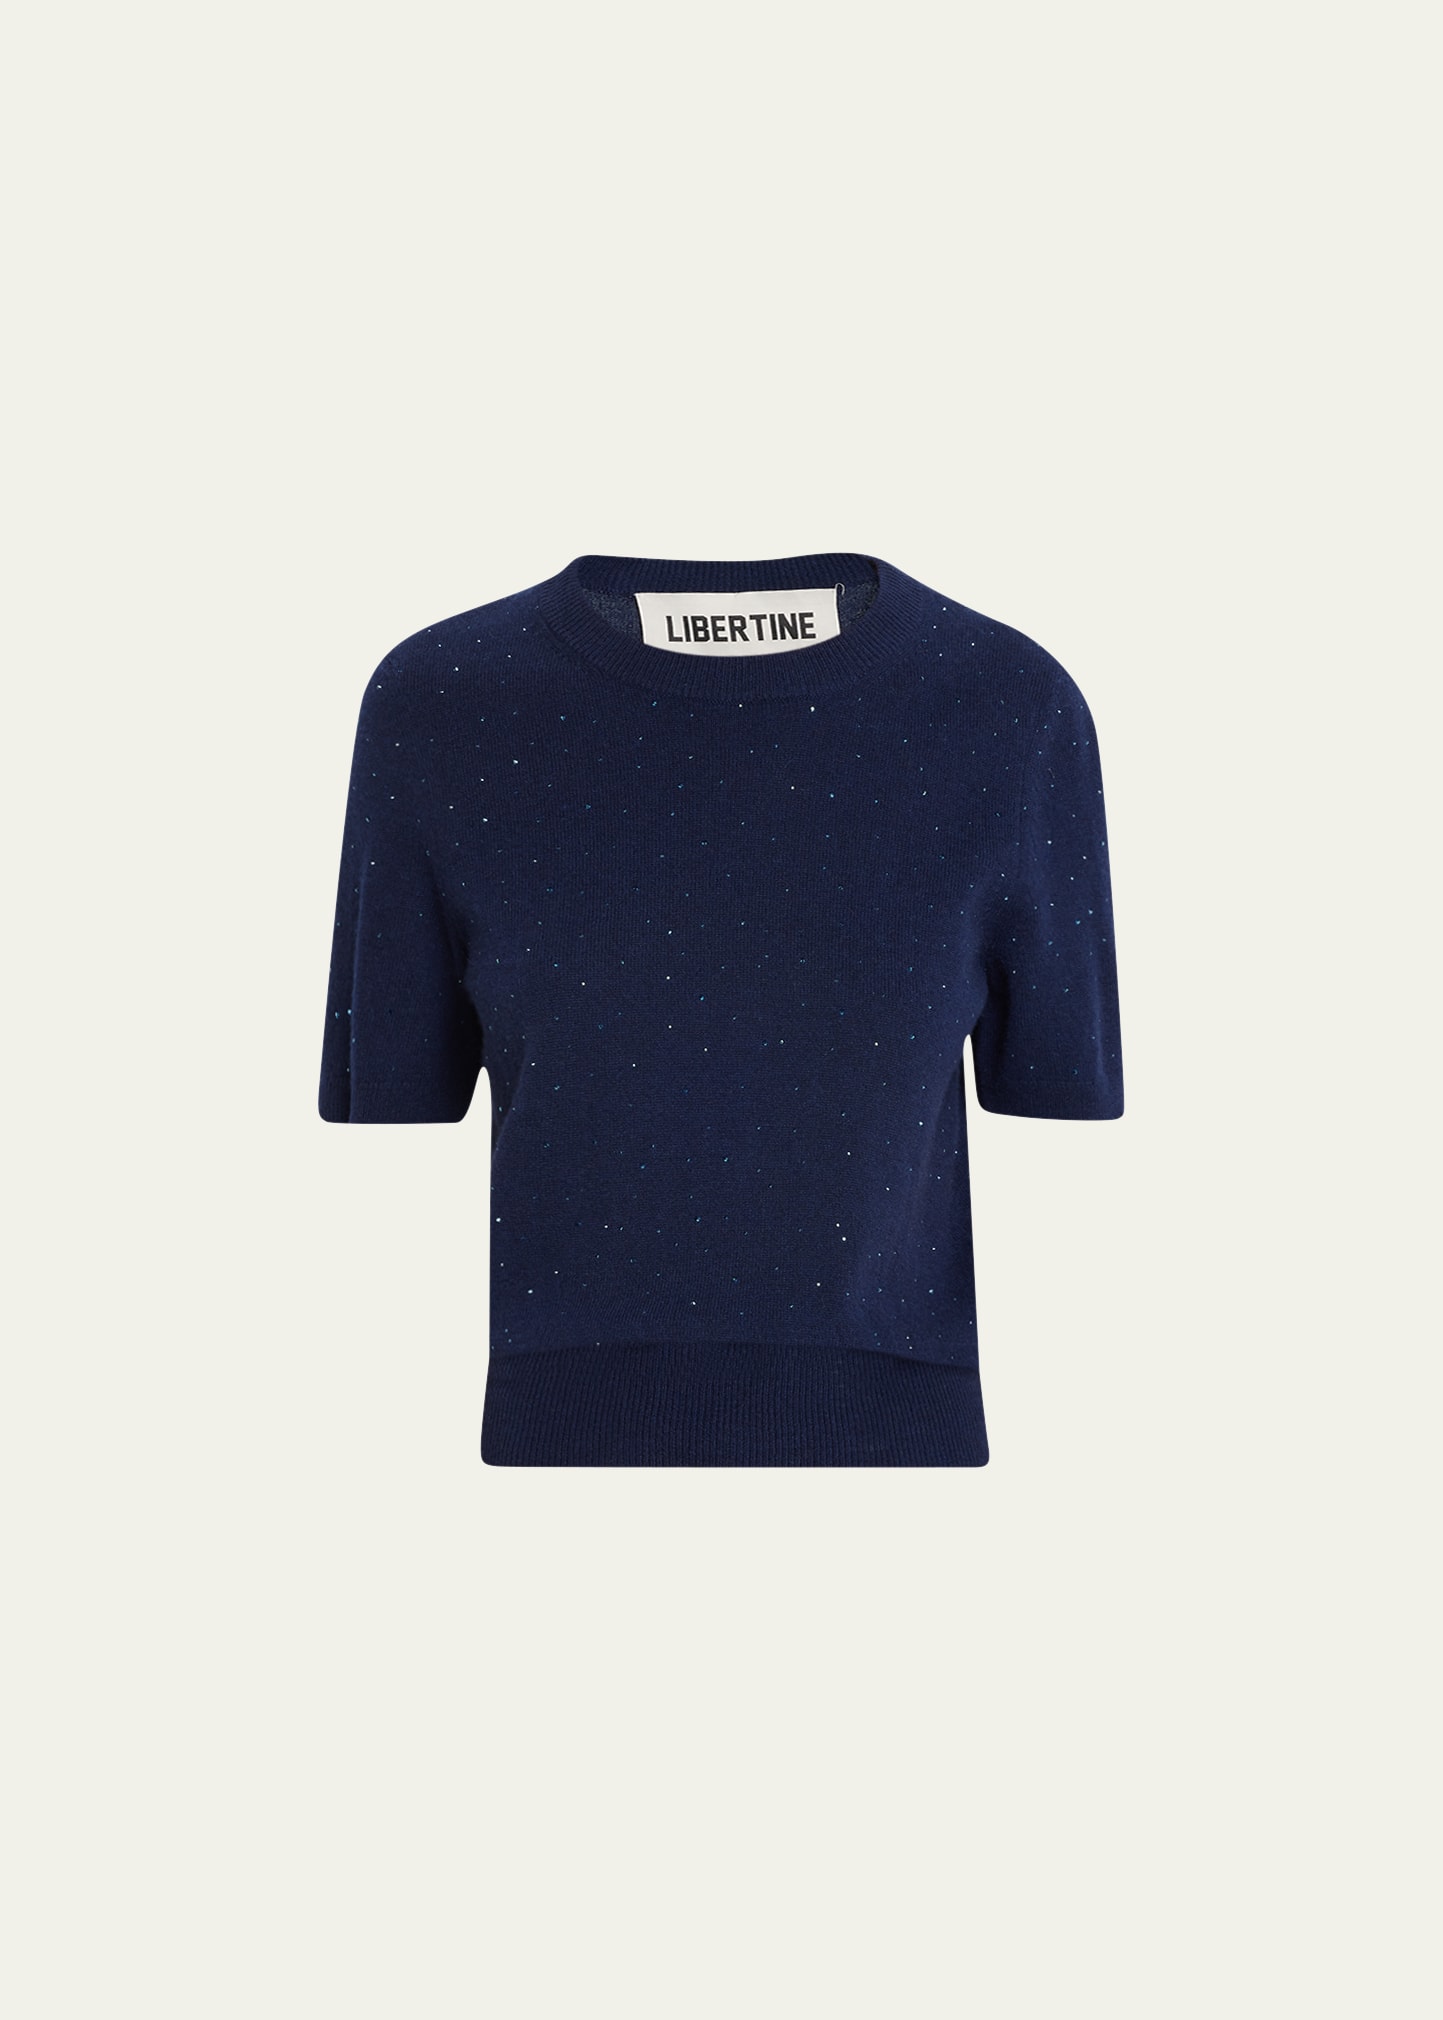 Stardust Cashmere Sweater with Rhinestone Embellishment